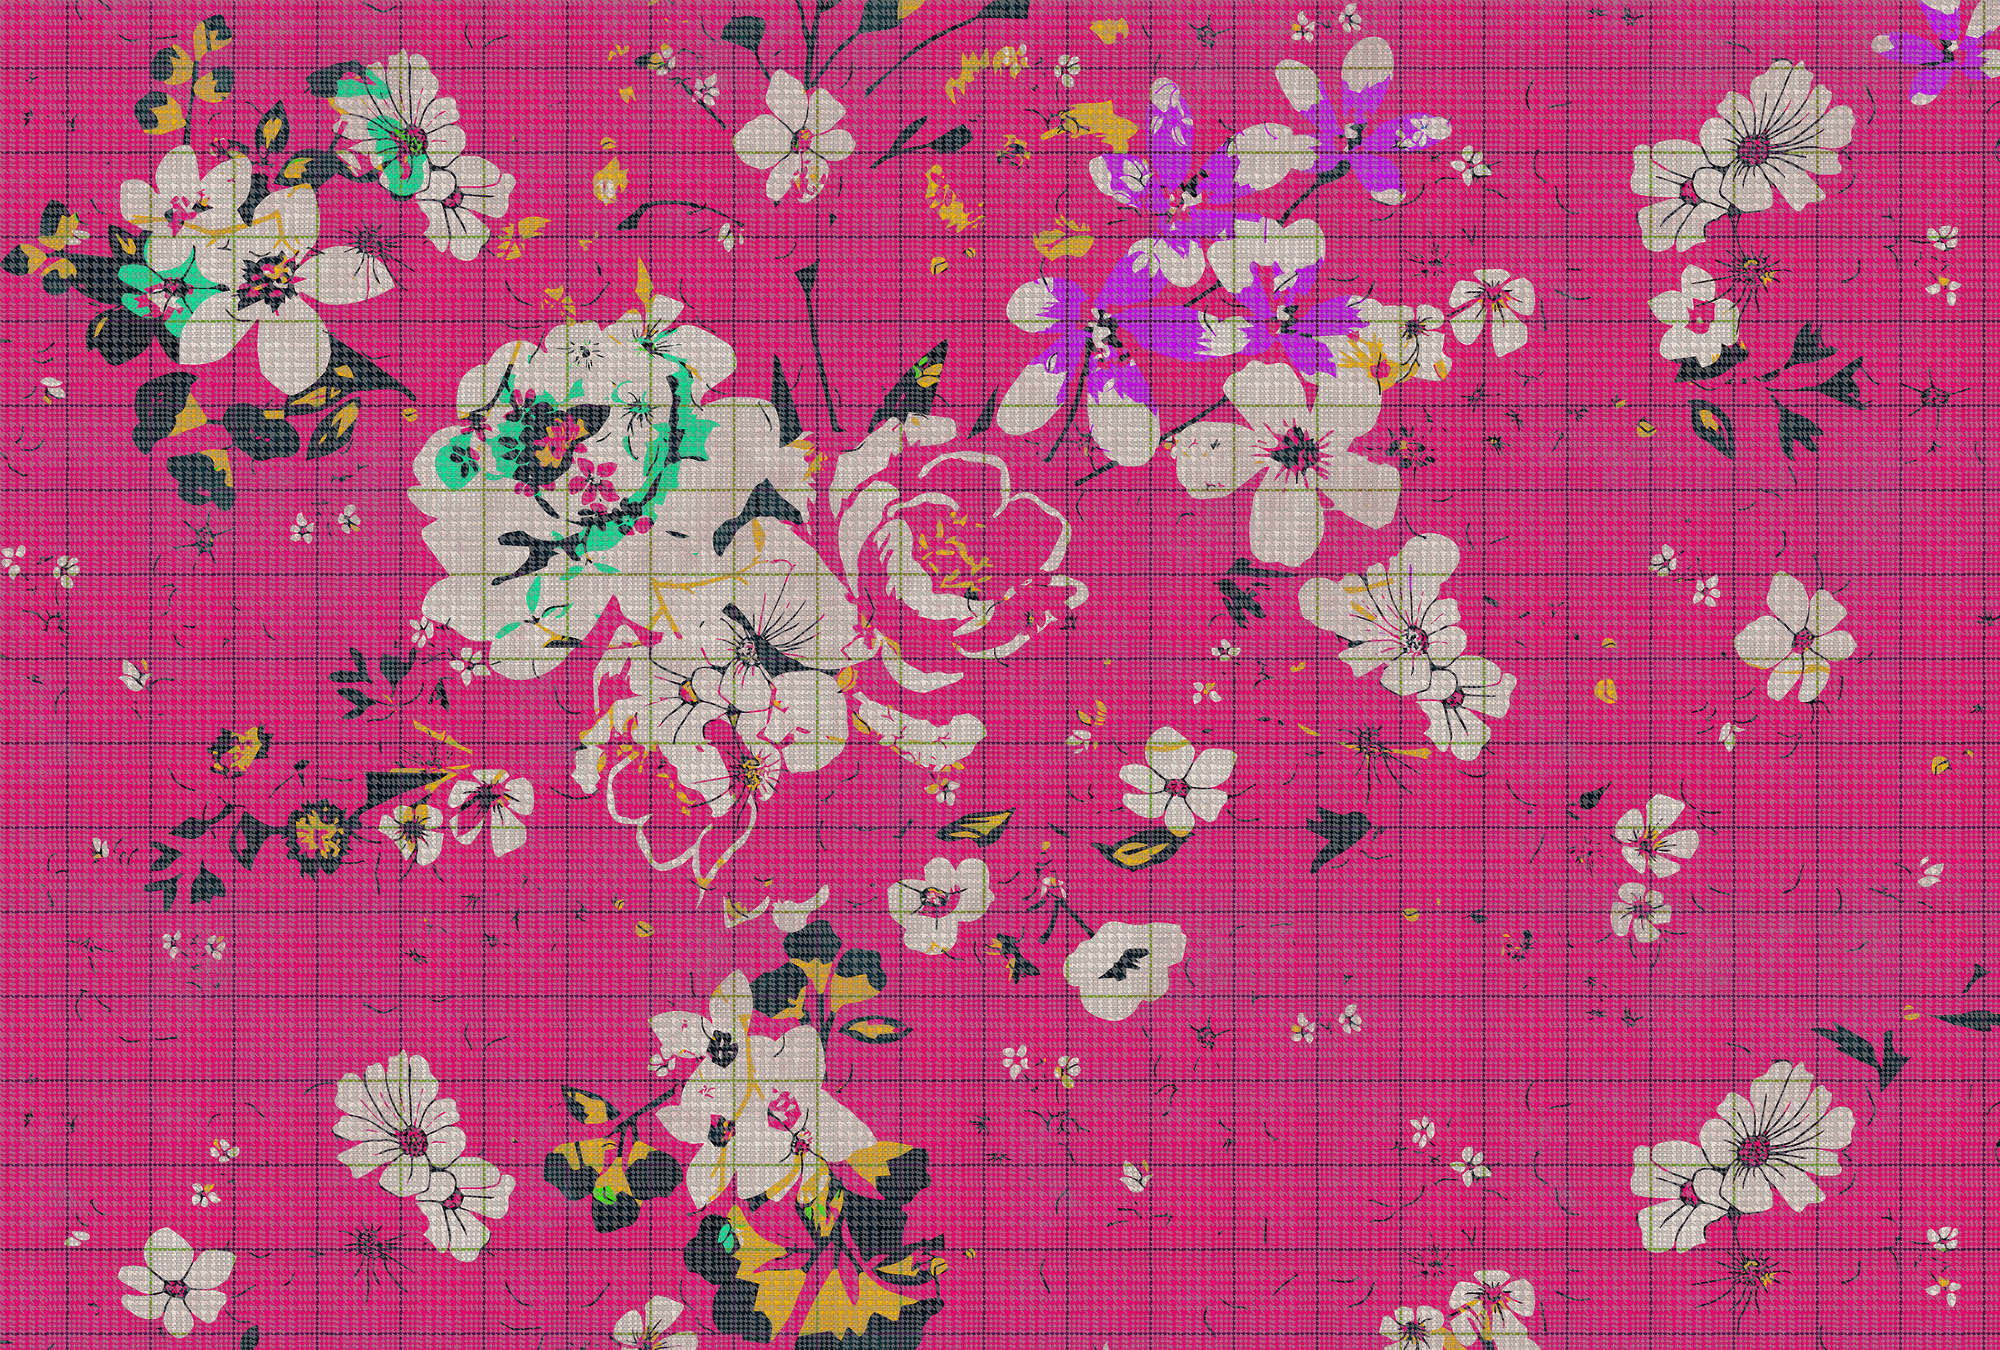             Flower plaid 2 - Photo wallpaper in checkered look colourful flower mosaic Pink - Green, Pink | Matt smooth fleece
        